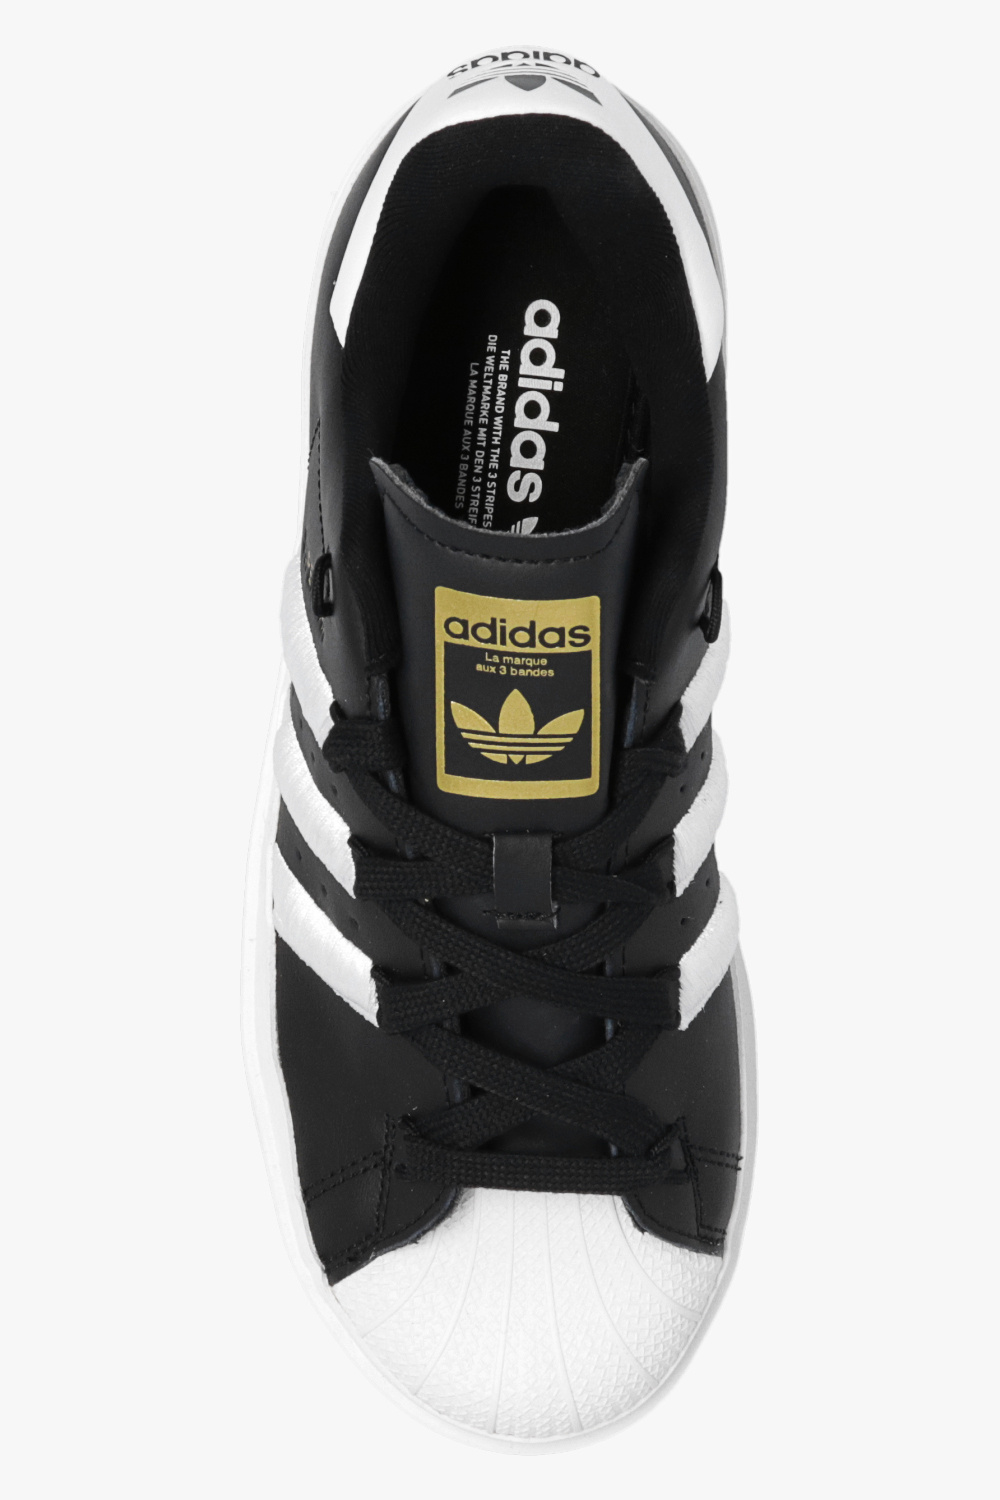 Adidas Originals Superstar Bonega Platform Sneakers in Black and White